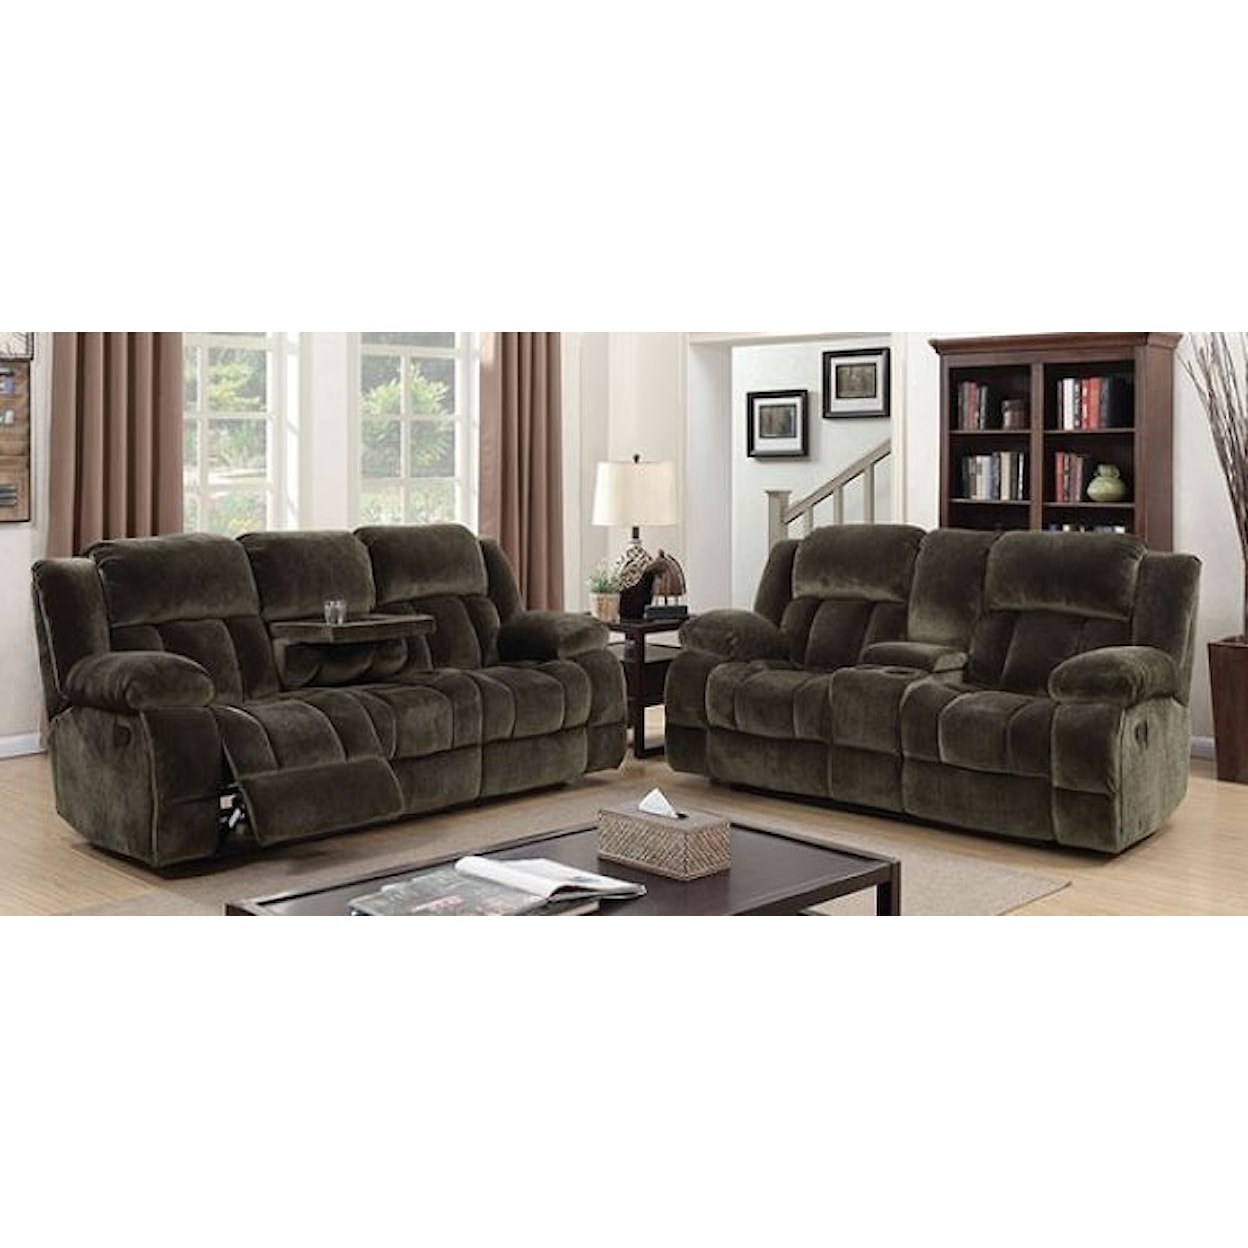 Furniture of America Sadhbh 2-Piece Living Room Set